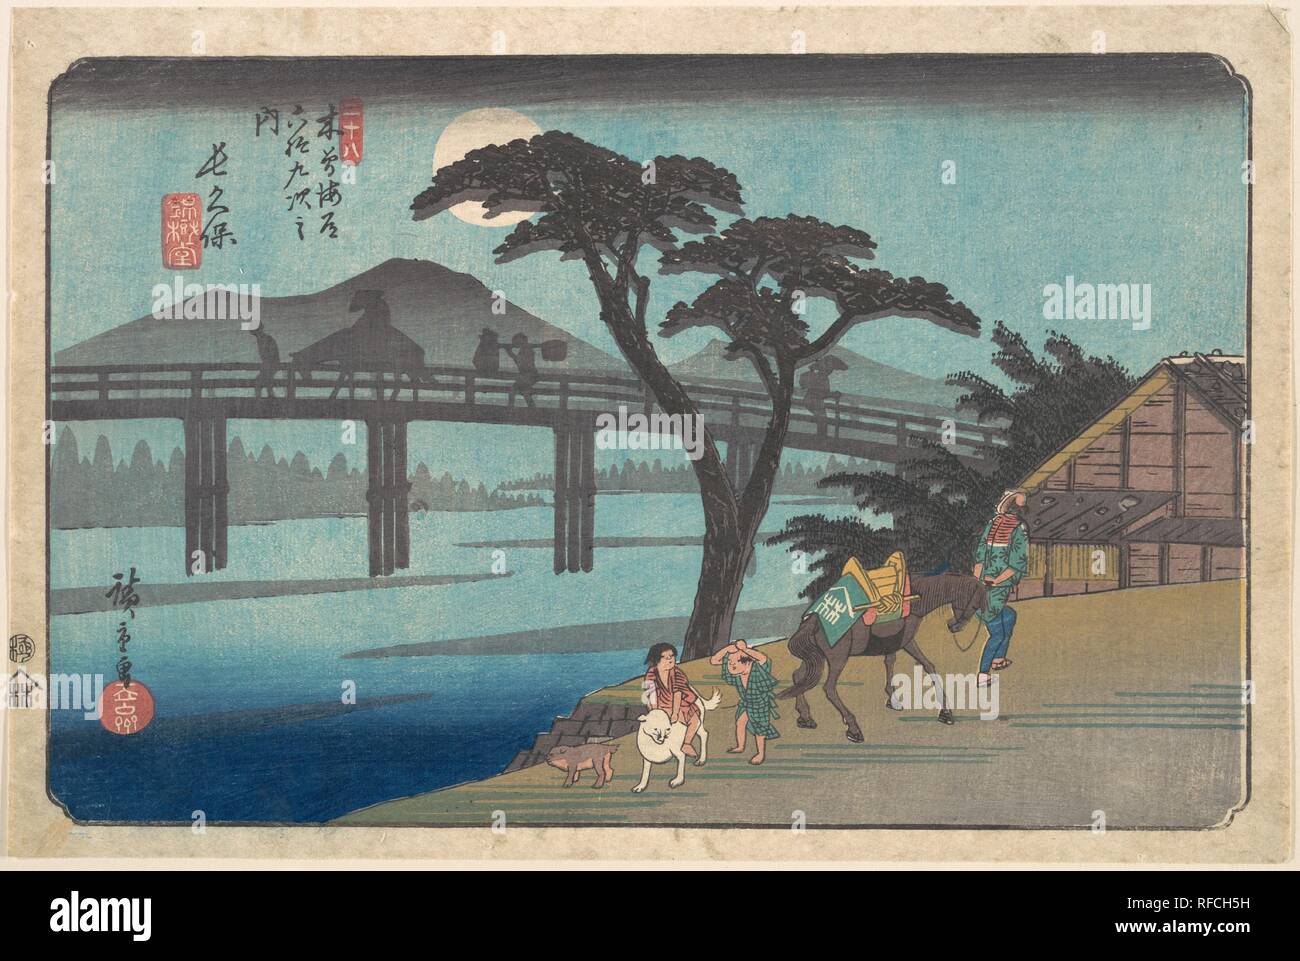 Nagakubo. Artist: Utagawa Hiroshige (Japanese, Tokyo (Edo) 1797-1858 Tokyo (Edo)). Culture: Japan. Dimensions: 9 7/8 x 14 7/8 in. (25.1 x 37.8 cm). Date: 1797-1858. Museum: Metropolitan Museum of Art, New York, USA. Stock Photo